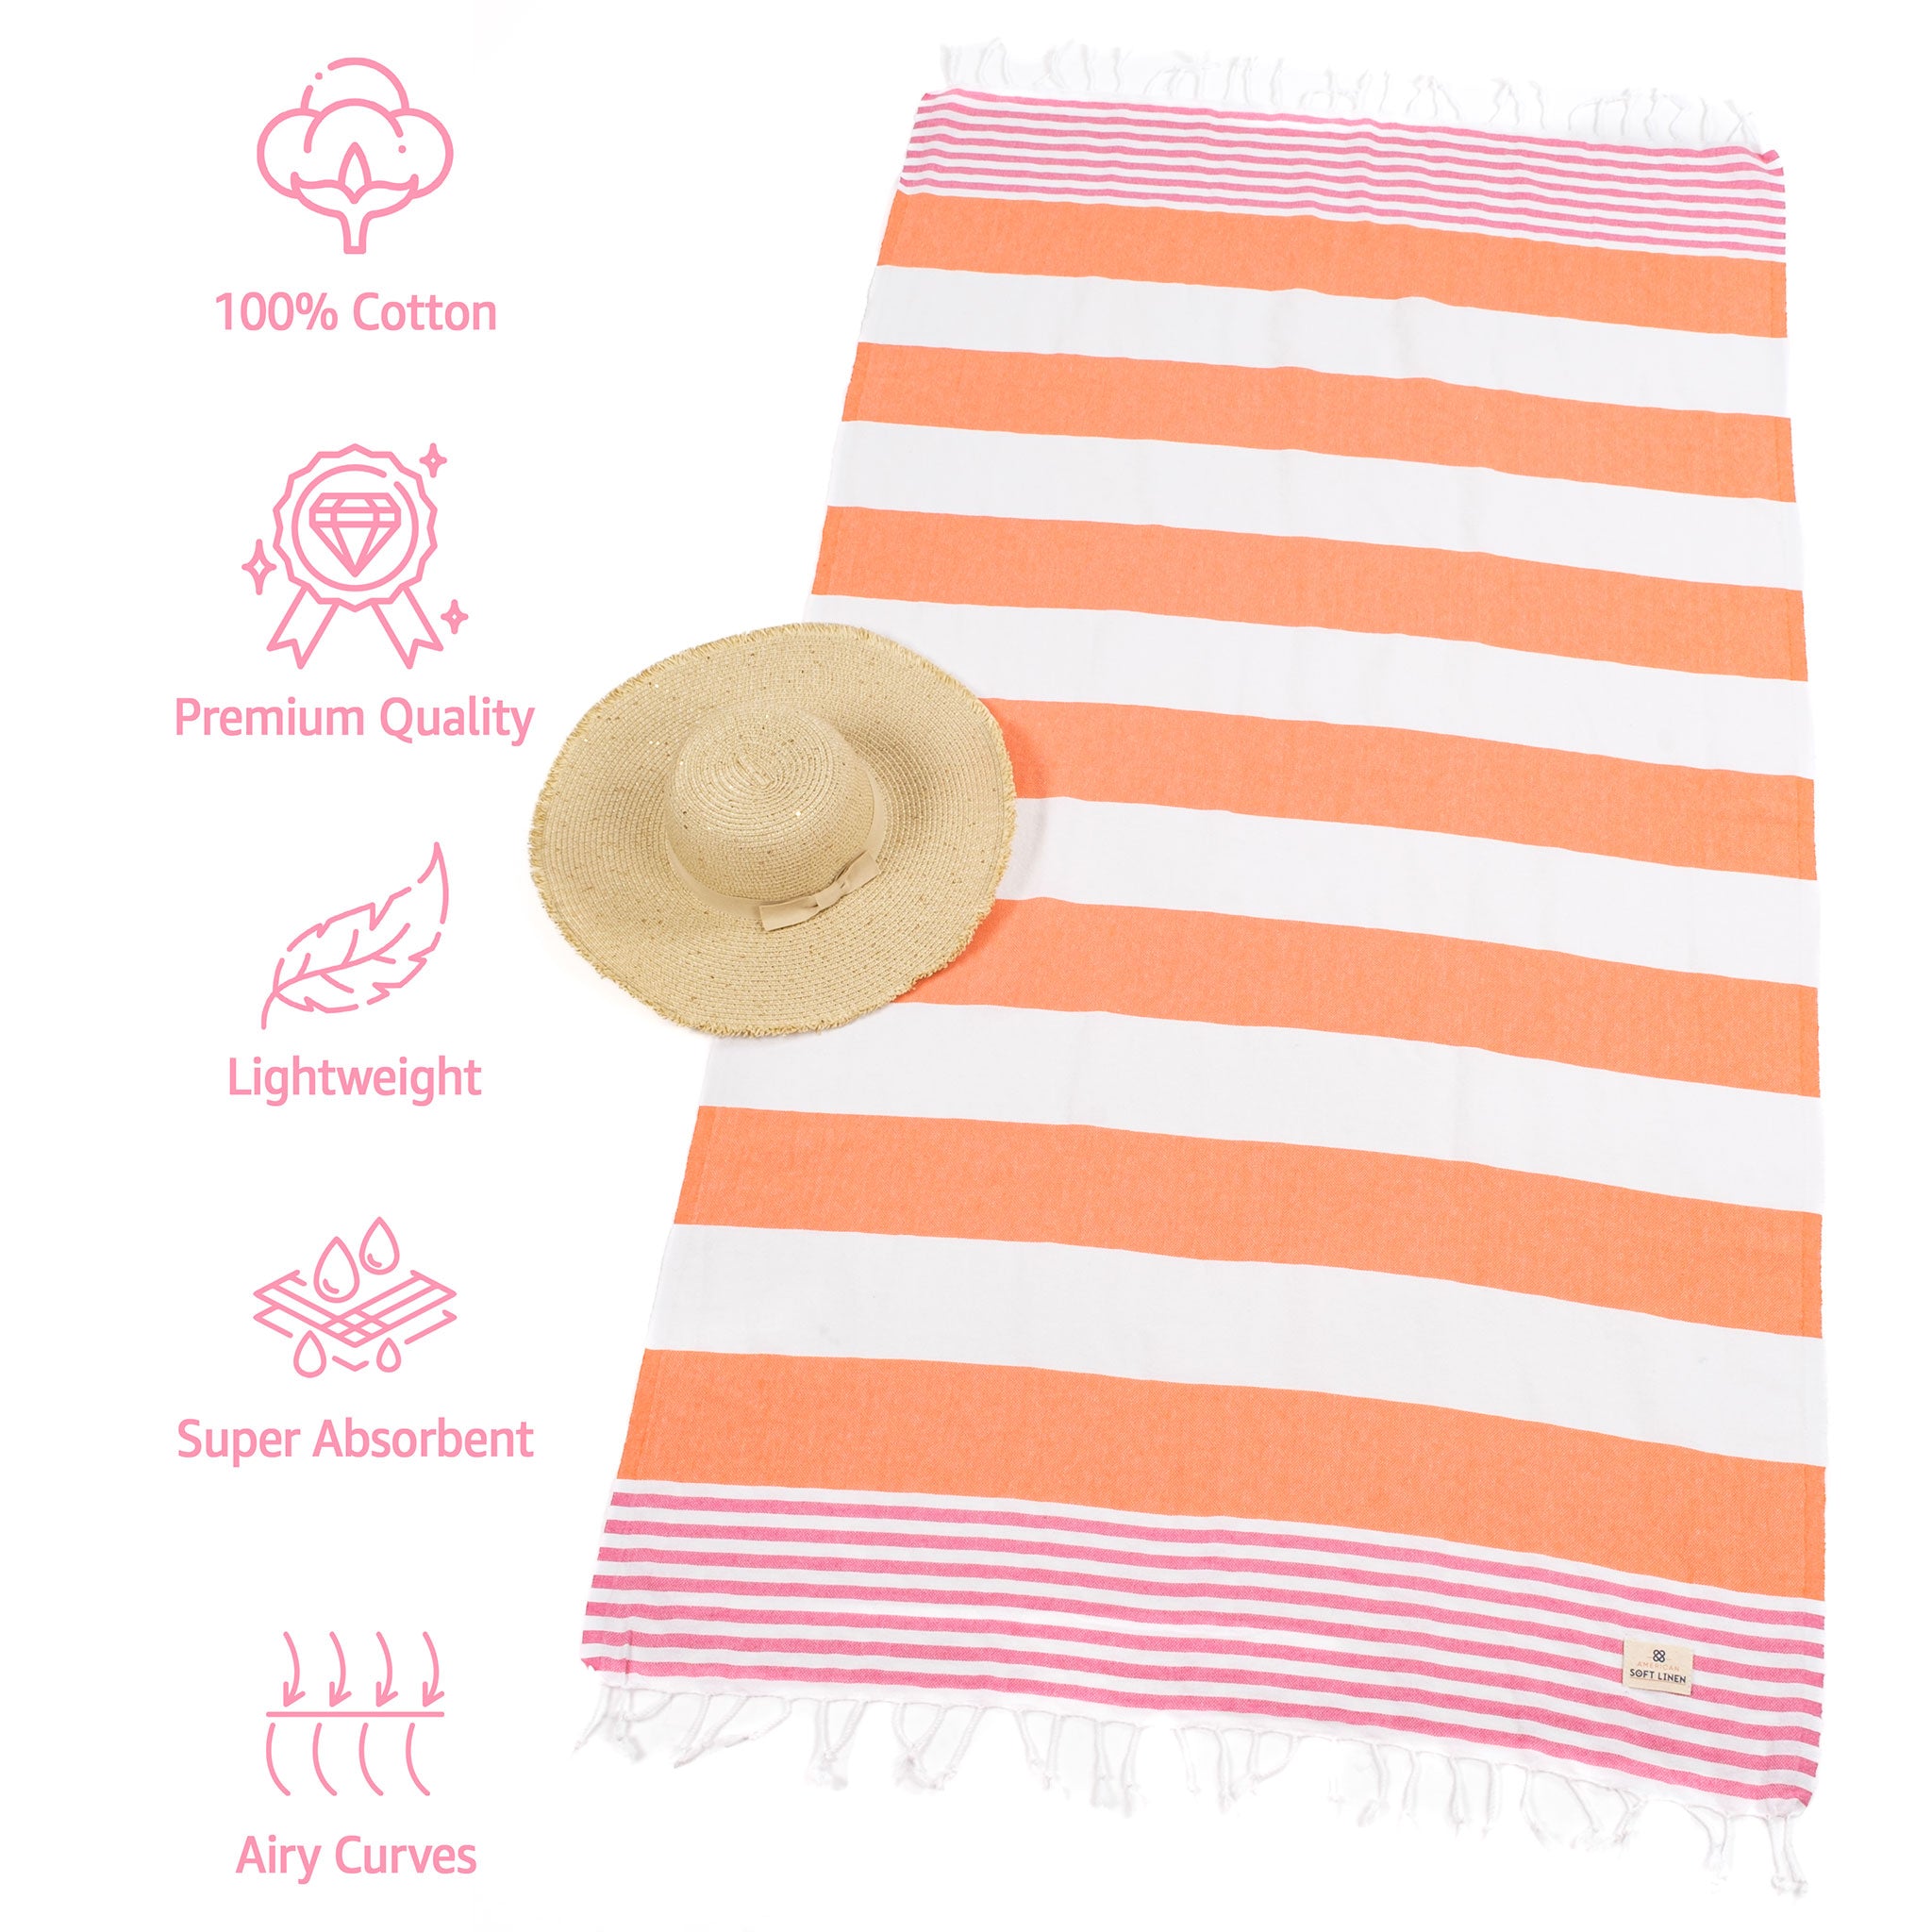 American Soft Linen - 100% Cotton Turkish Peshtemal Towels - 44 Set Case Pack - Pink - 3